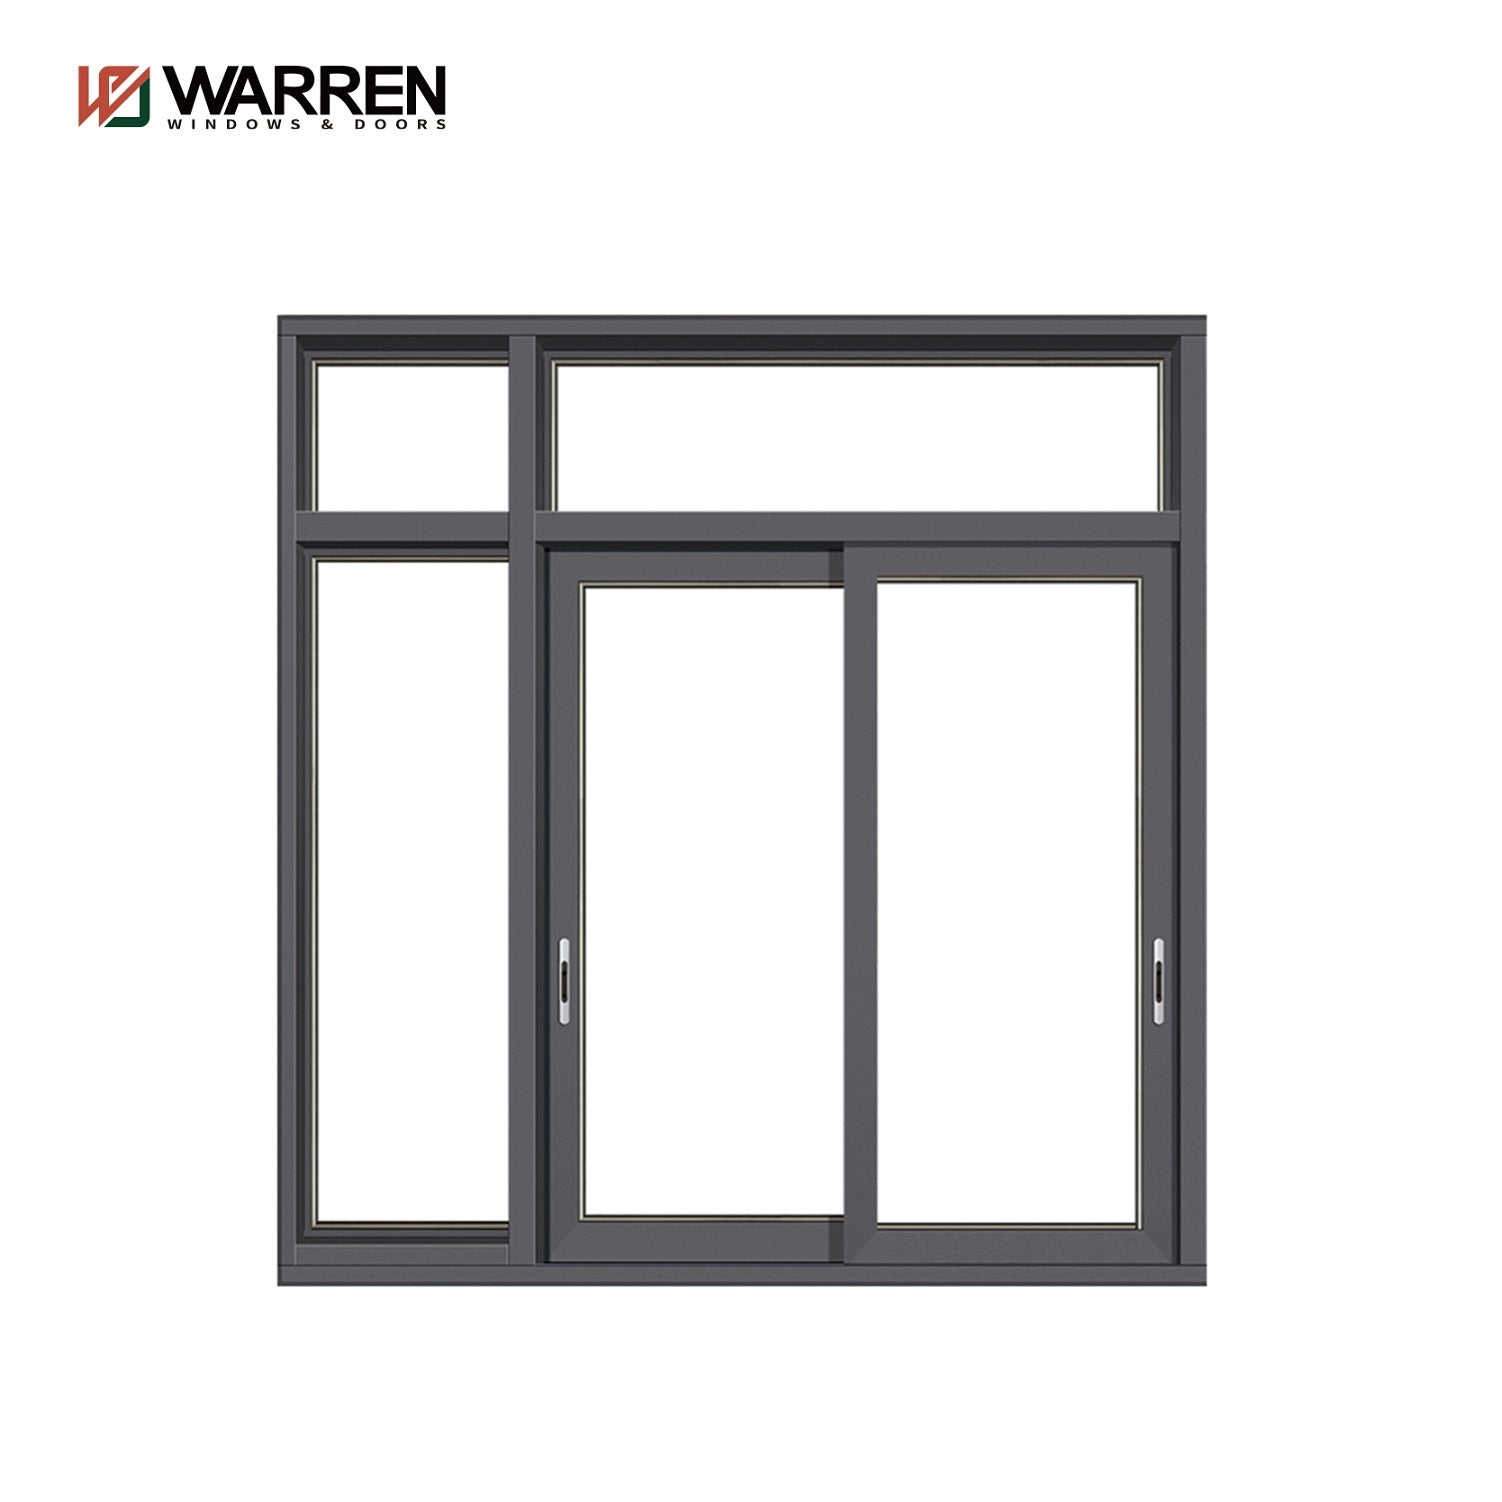 Warren 72x60 window 6ft x 5ft China factory supplied top quality double glazing sliding windows